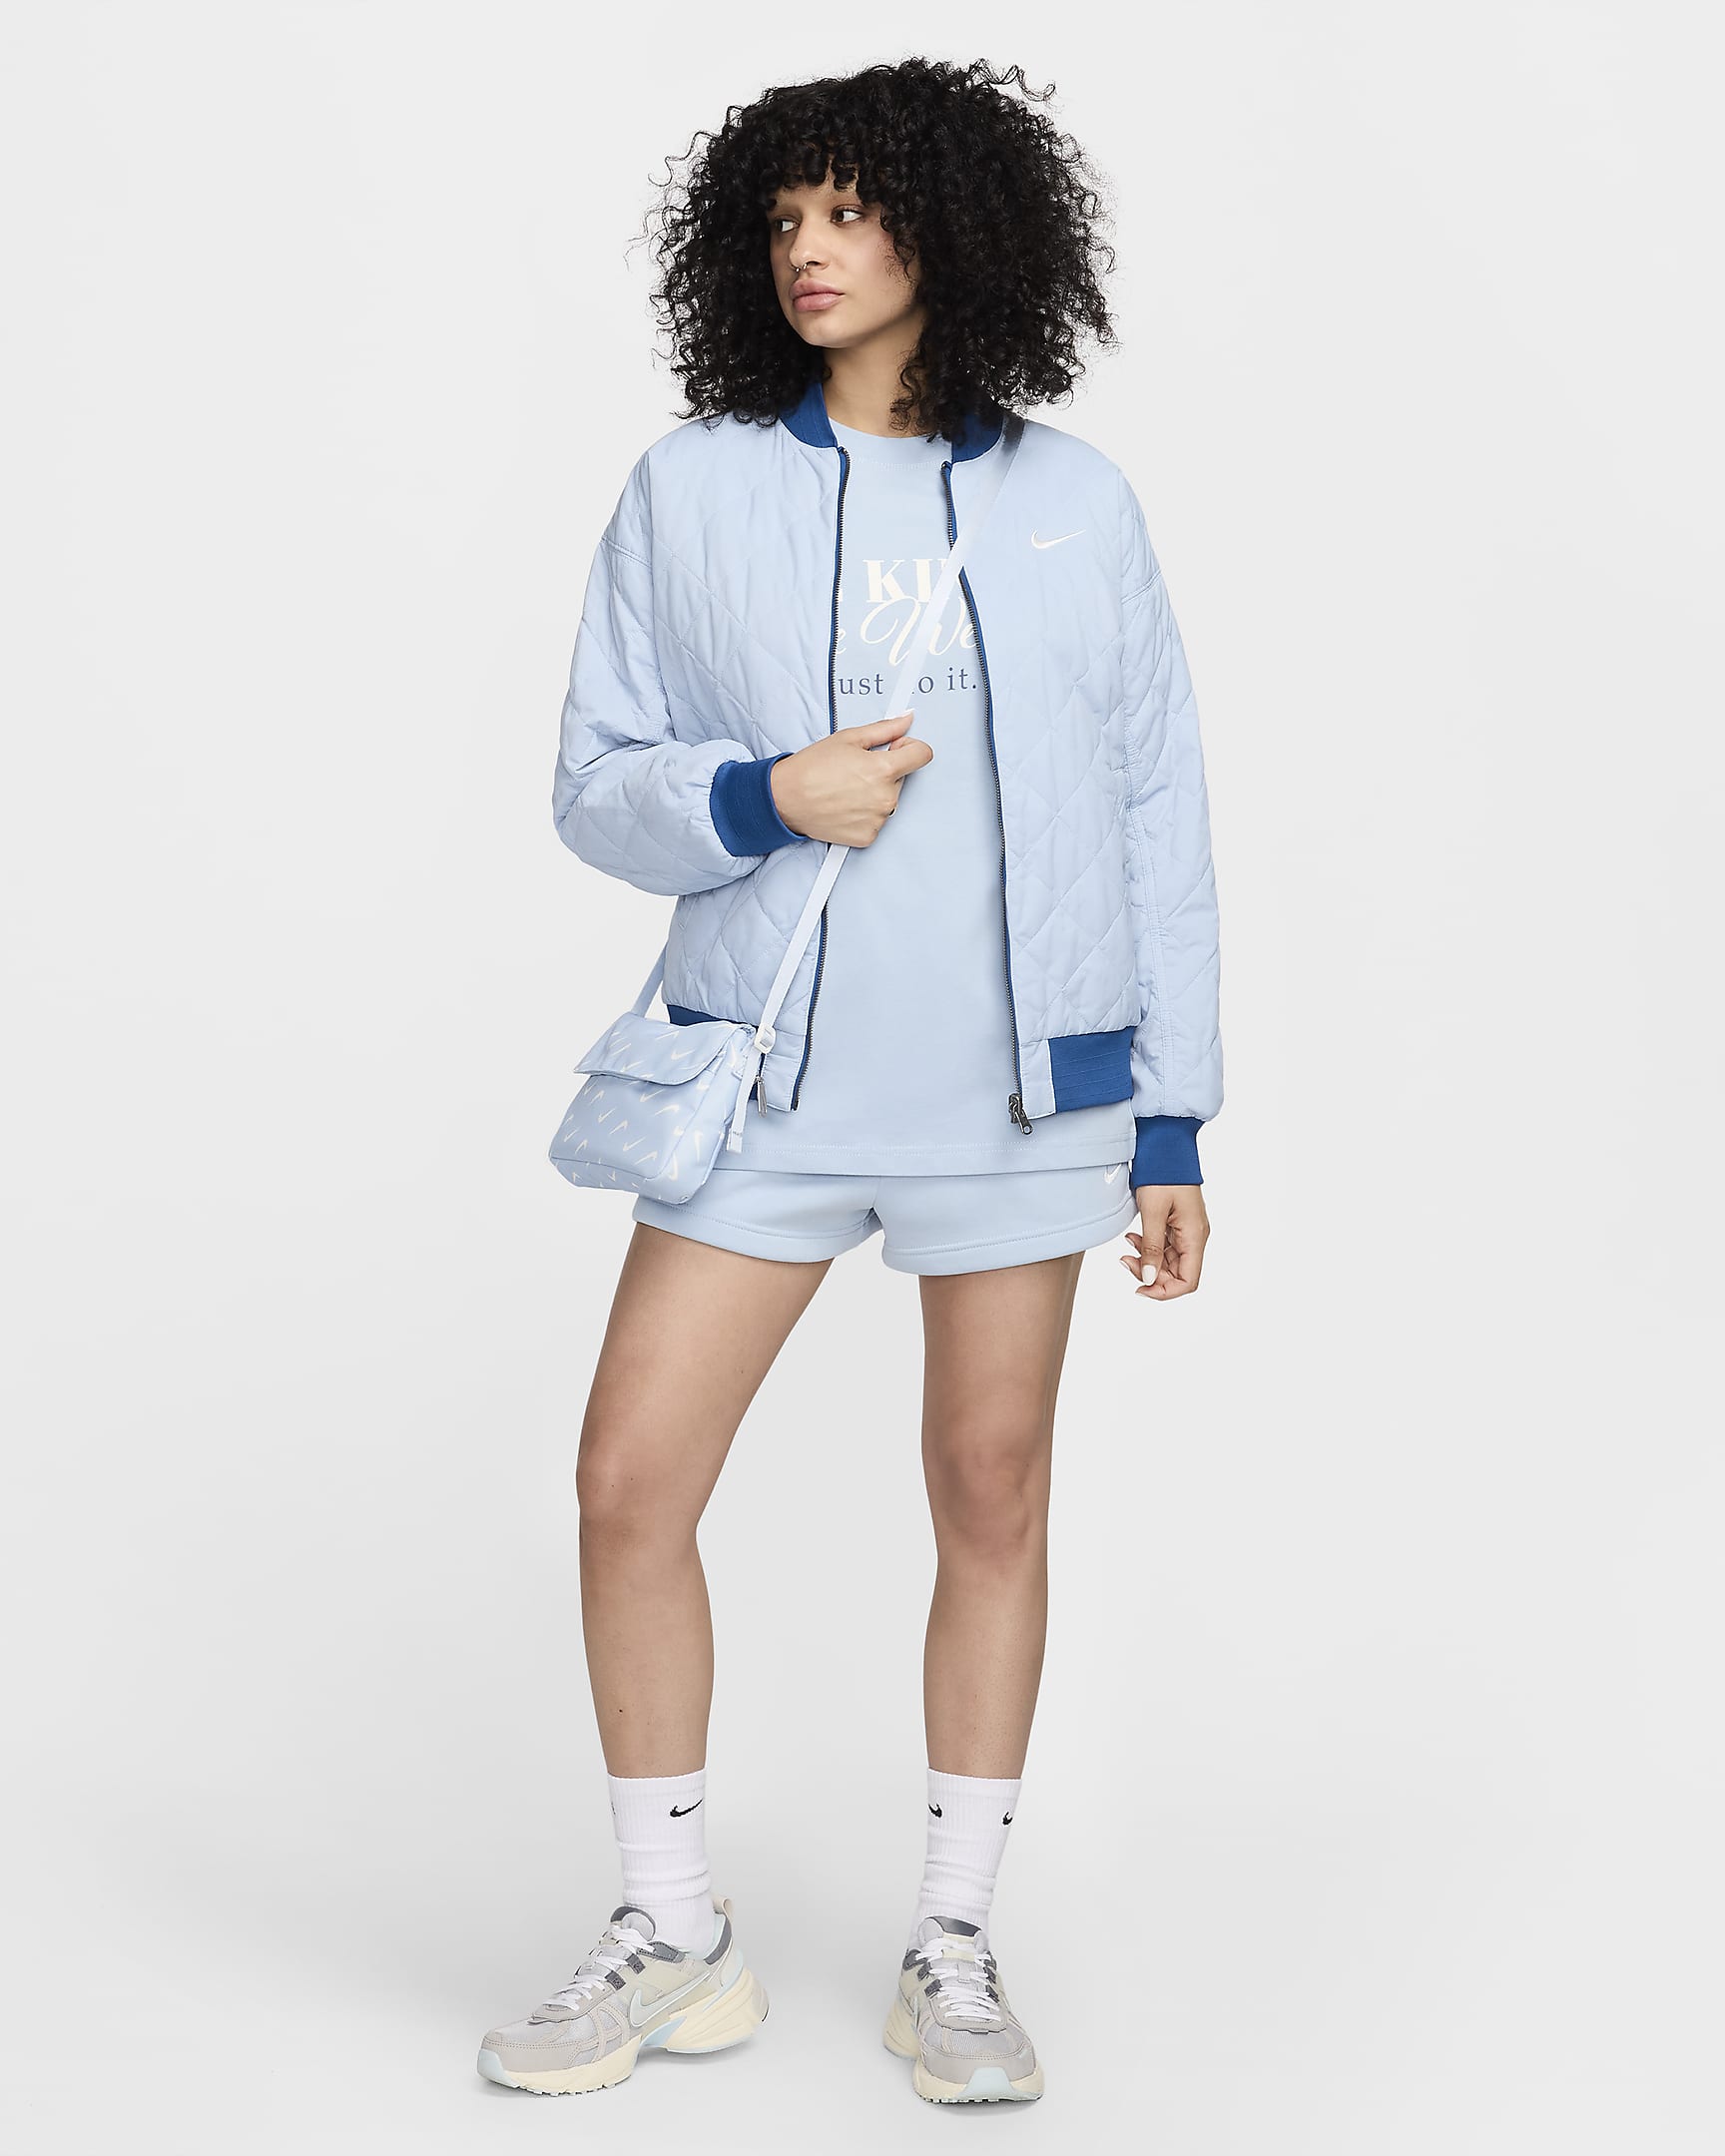 Nike Sportswear Women's T-Shirt - Light Armory Blue/Sail